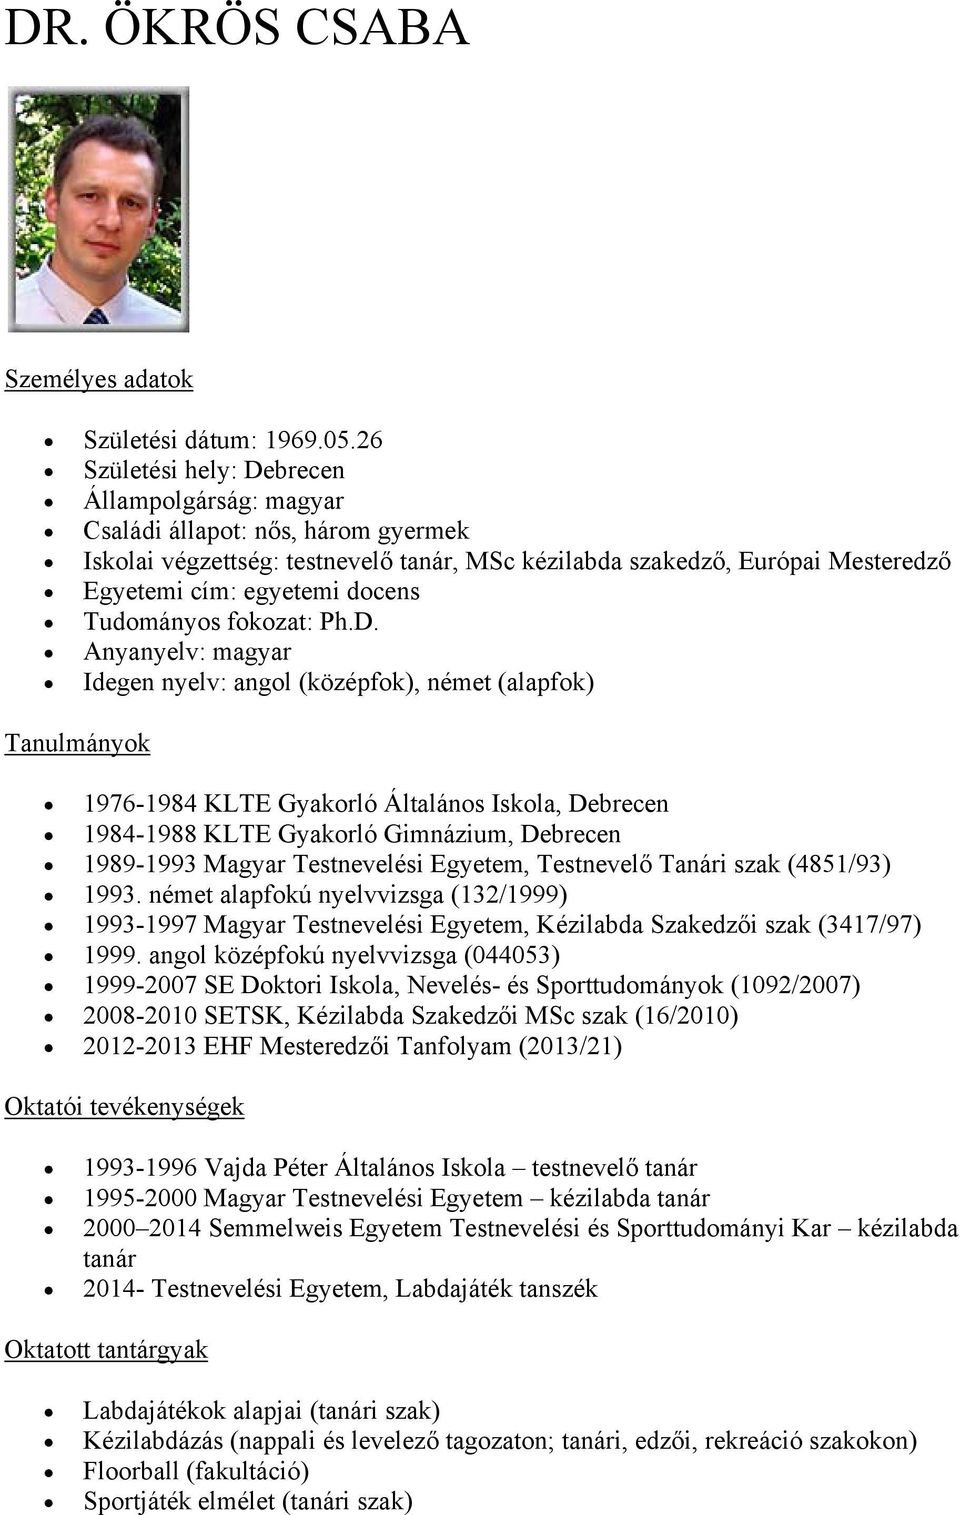 Dr Okros Csaba Szemelyes Adatok Pdf Free Download